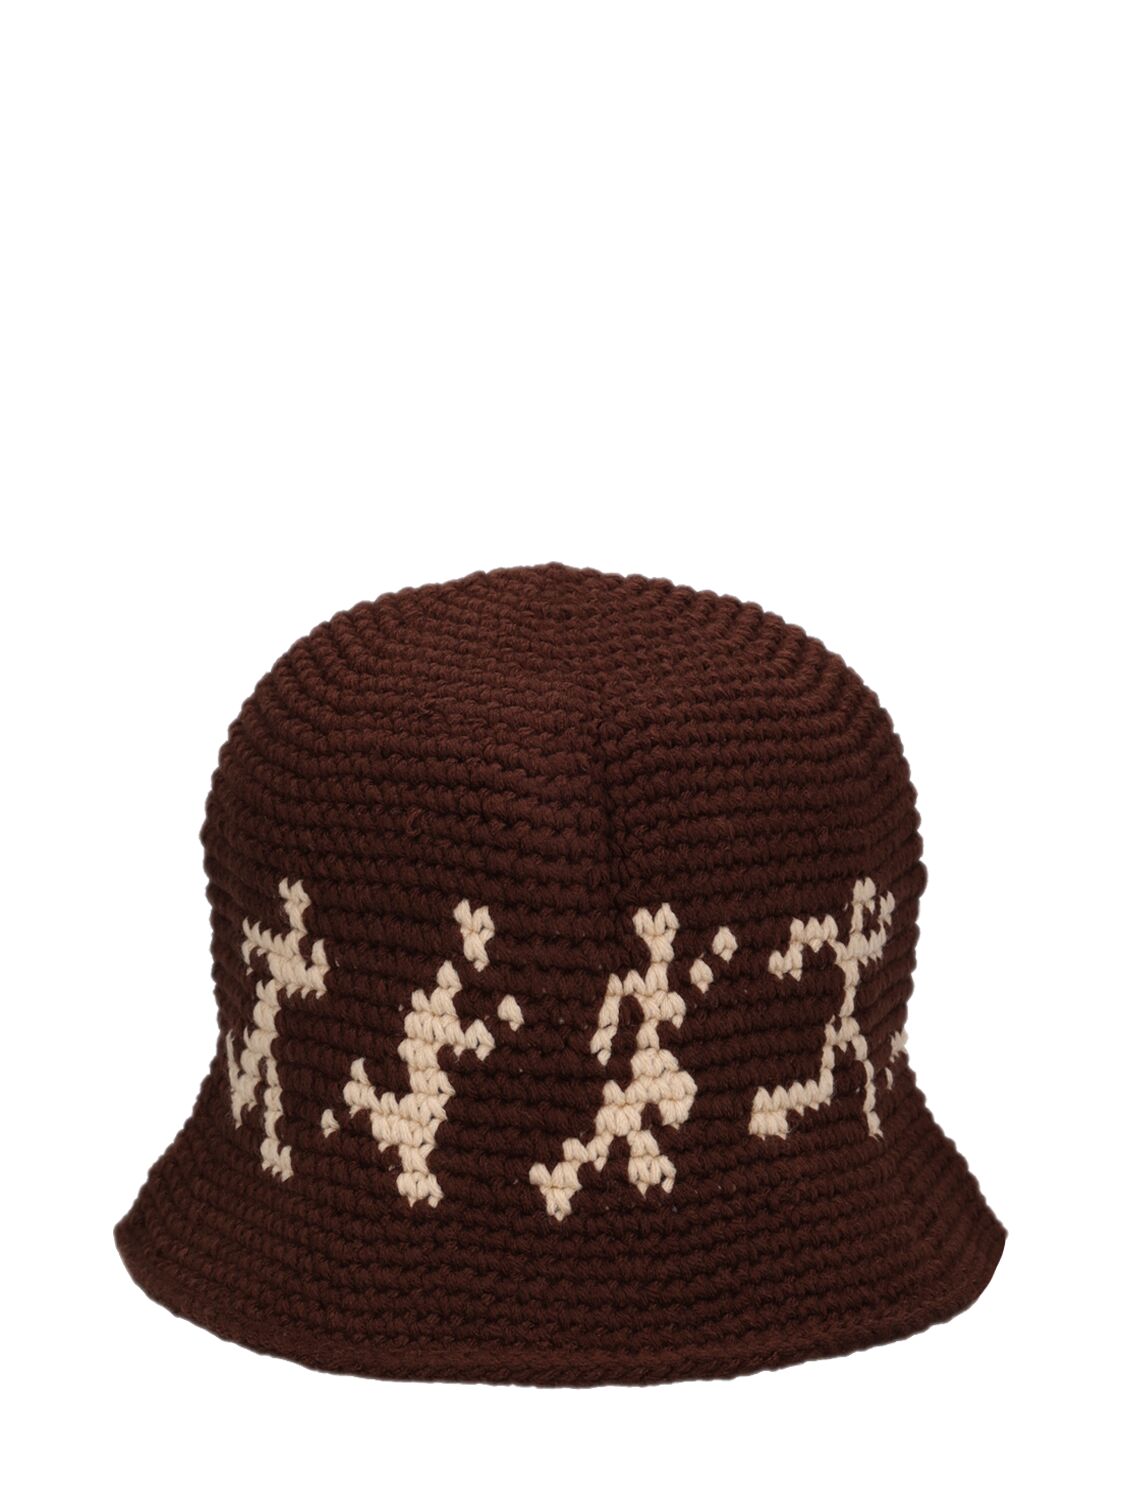 Kidsuper Running Guys Cotton Crochet Hat In Brown,white